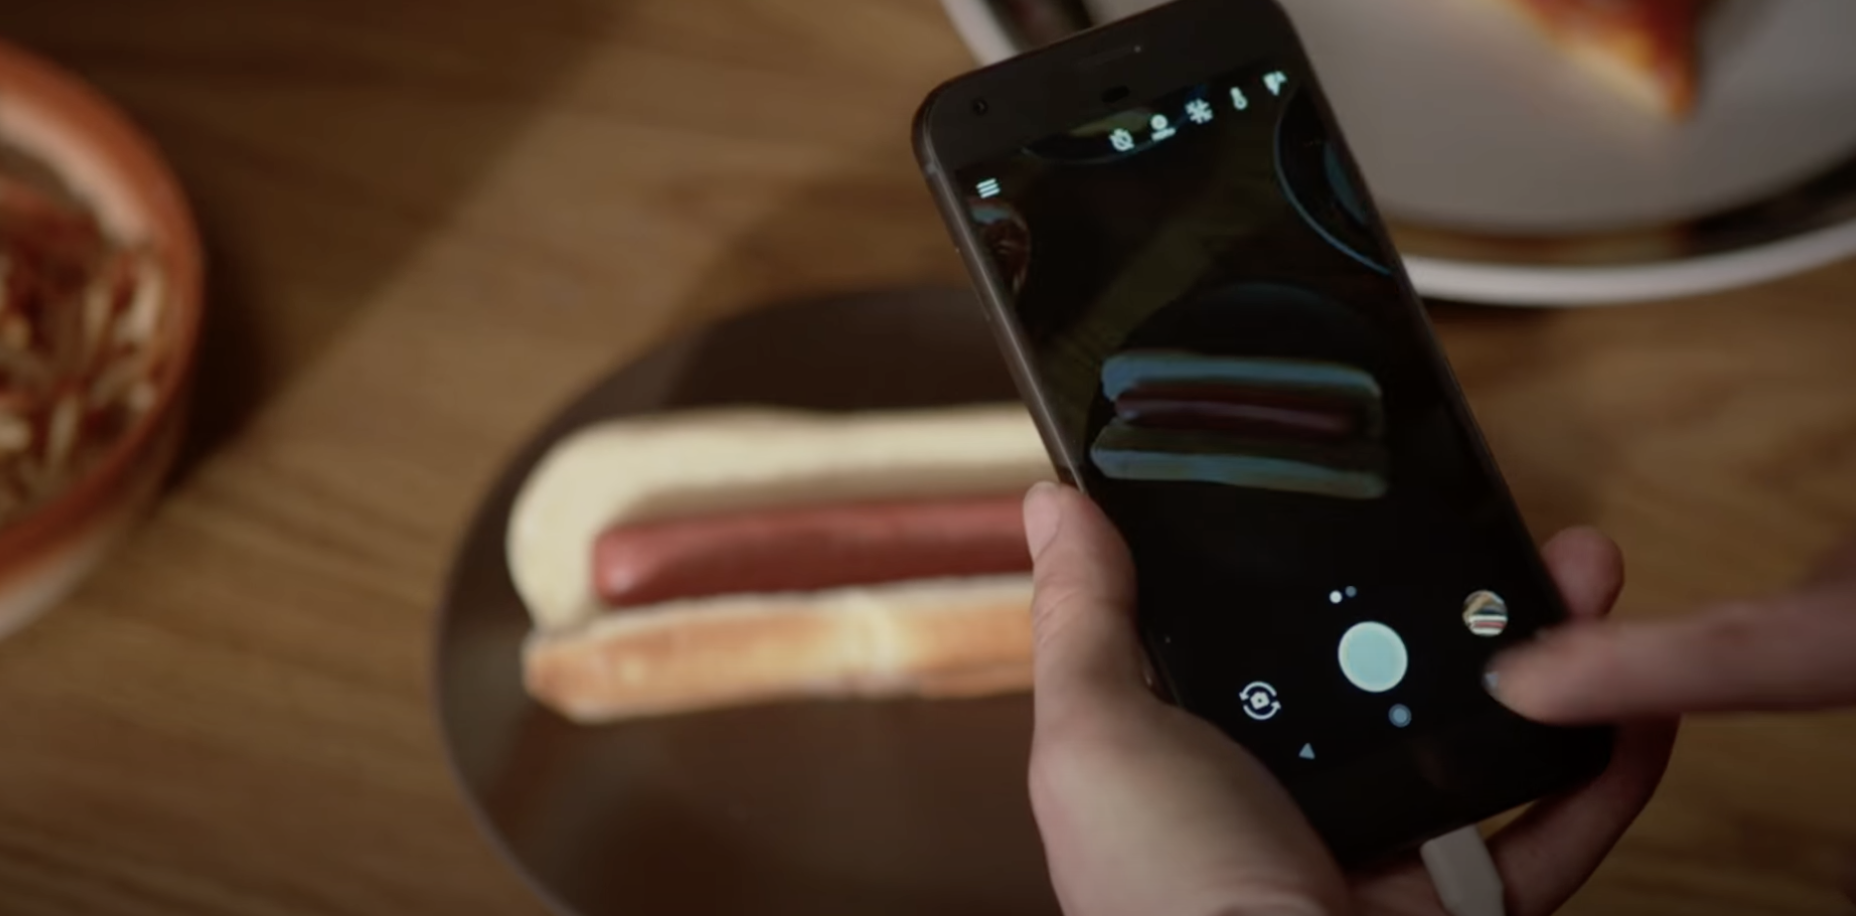 Extrait de la série Silicon Valley - Application “Hotdog”